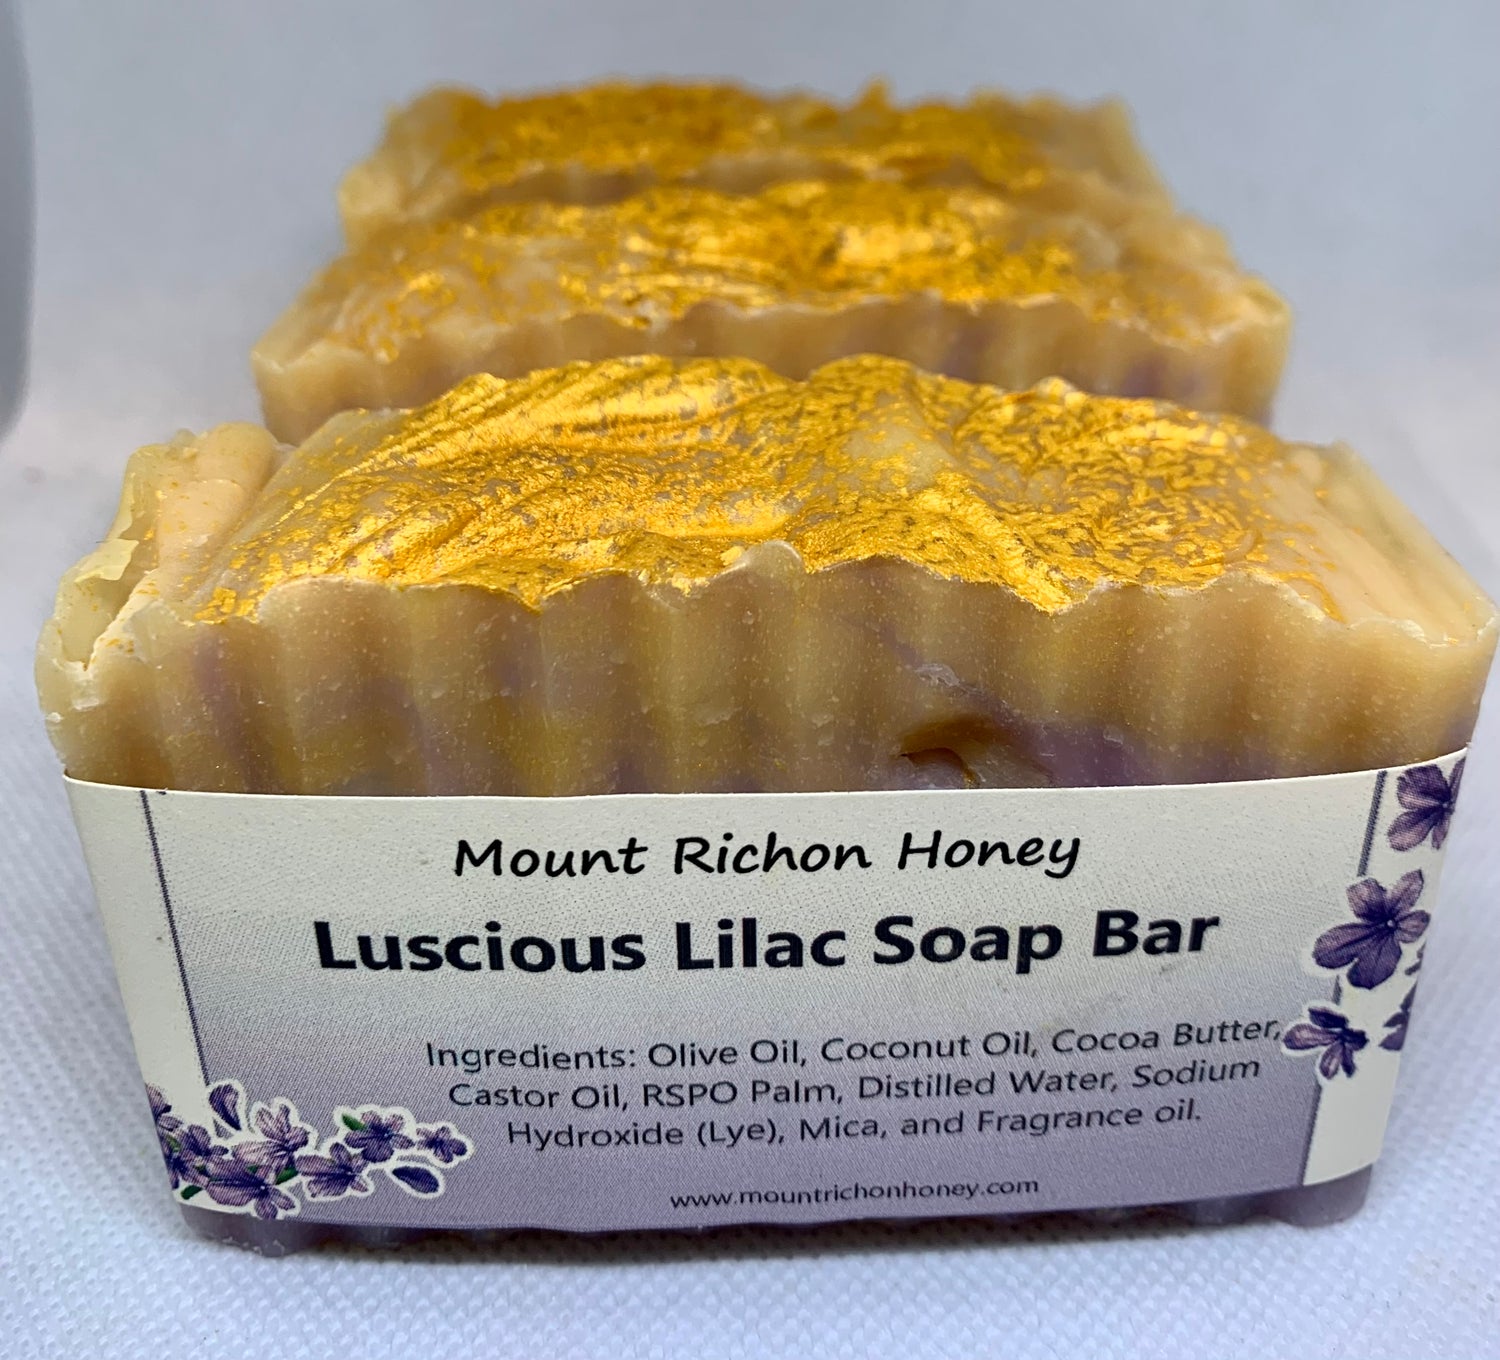 Luscious Lilac Soap Bar